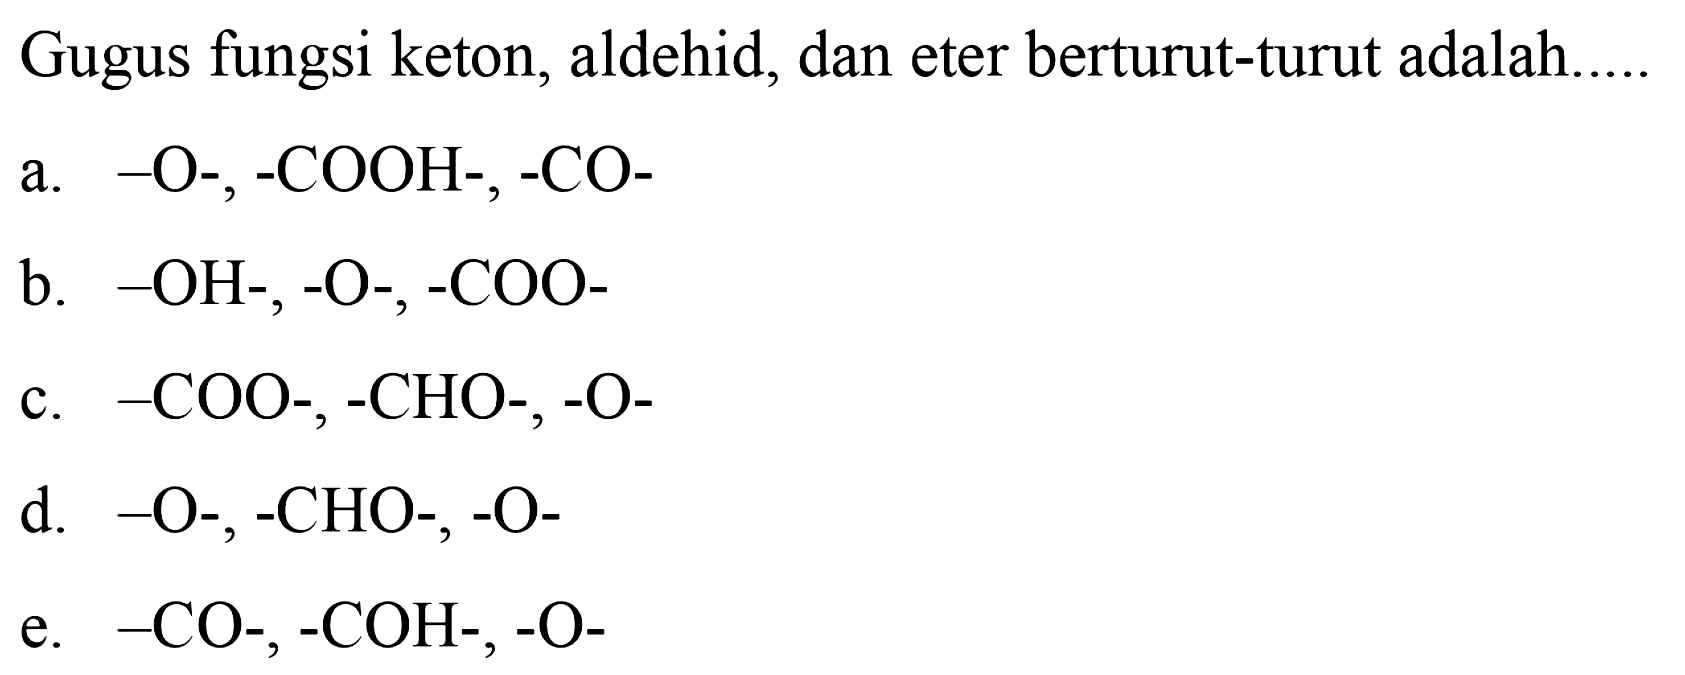 Gugus fungsi keton, aldehid, dan eter berturut-turut adalah..... a. -O-,-COOH-,-CO- b. -OH-,-O-,-COO- c. -COO-,-CHO-,-O- d. -O-,-CHO-,-O- e. -CO-,-COH-,-O-